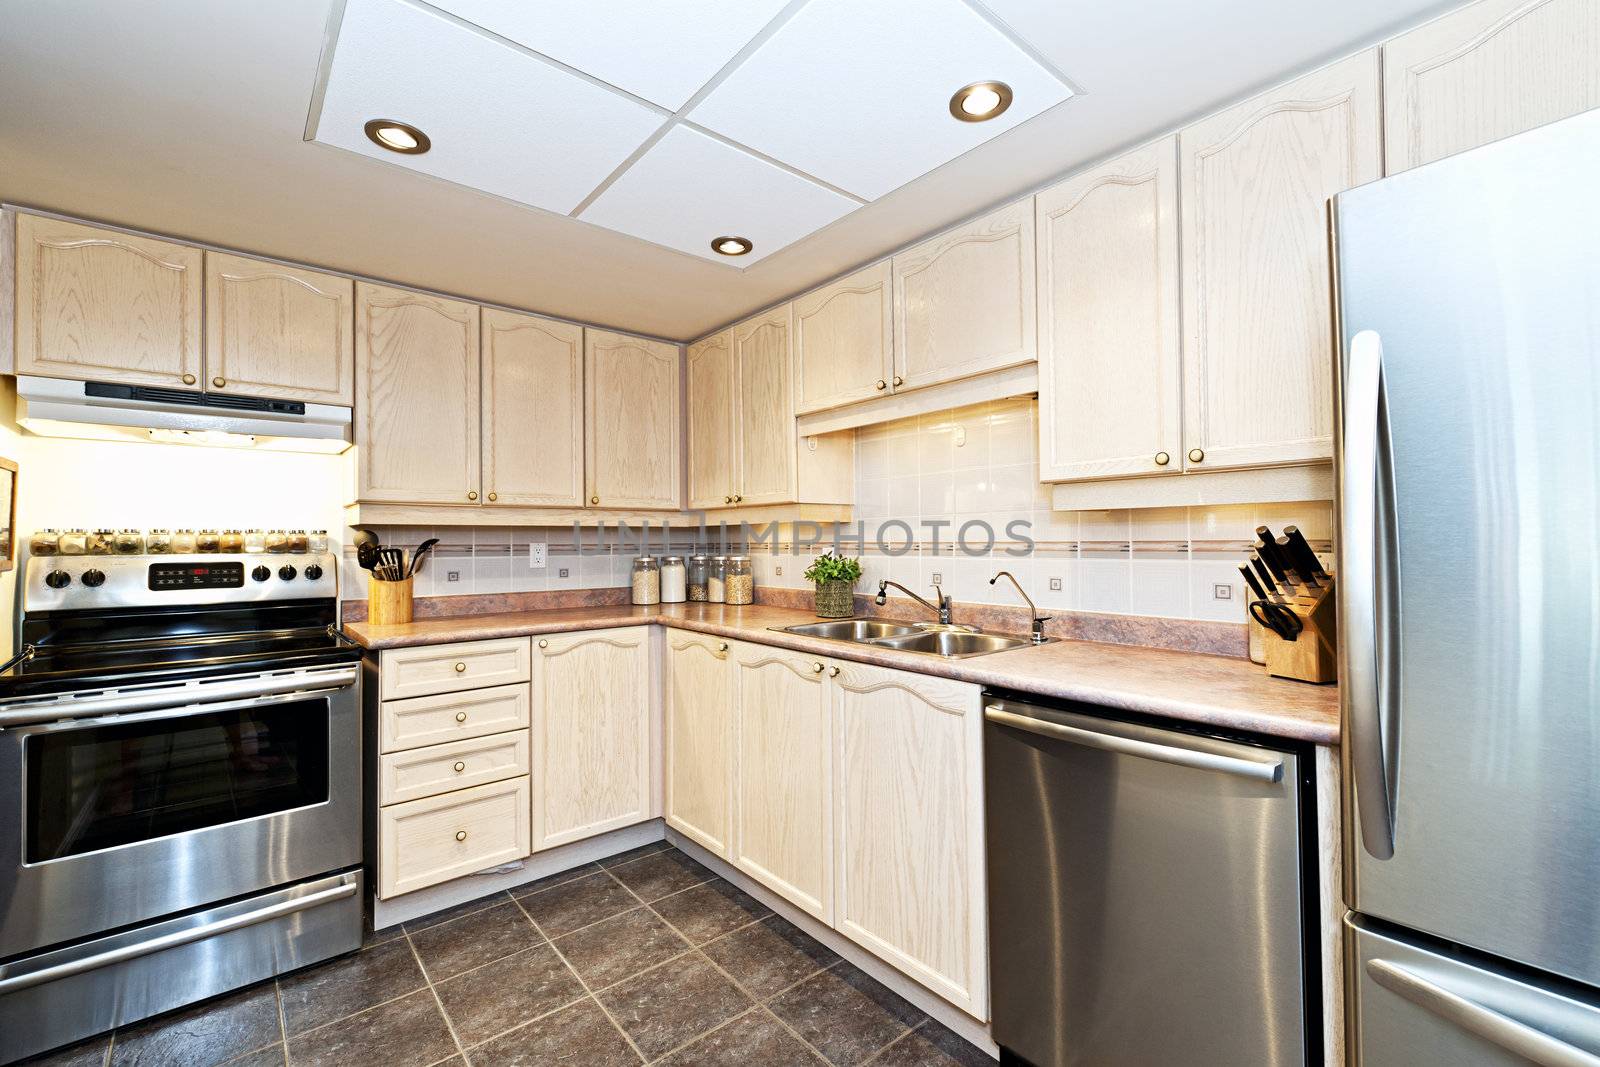 Modern luxury kitchen with stainless steel appliances